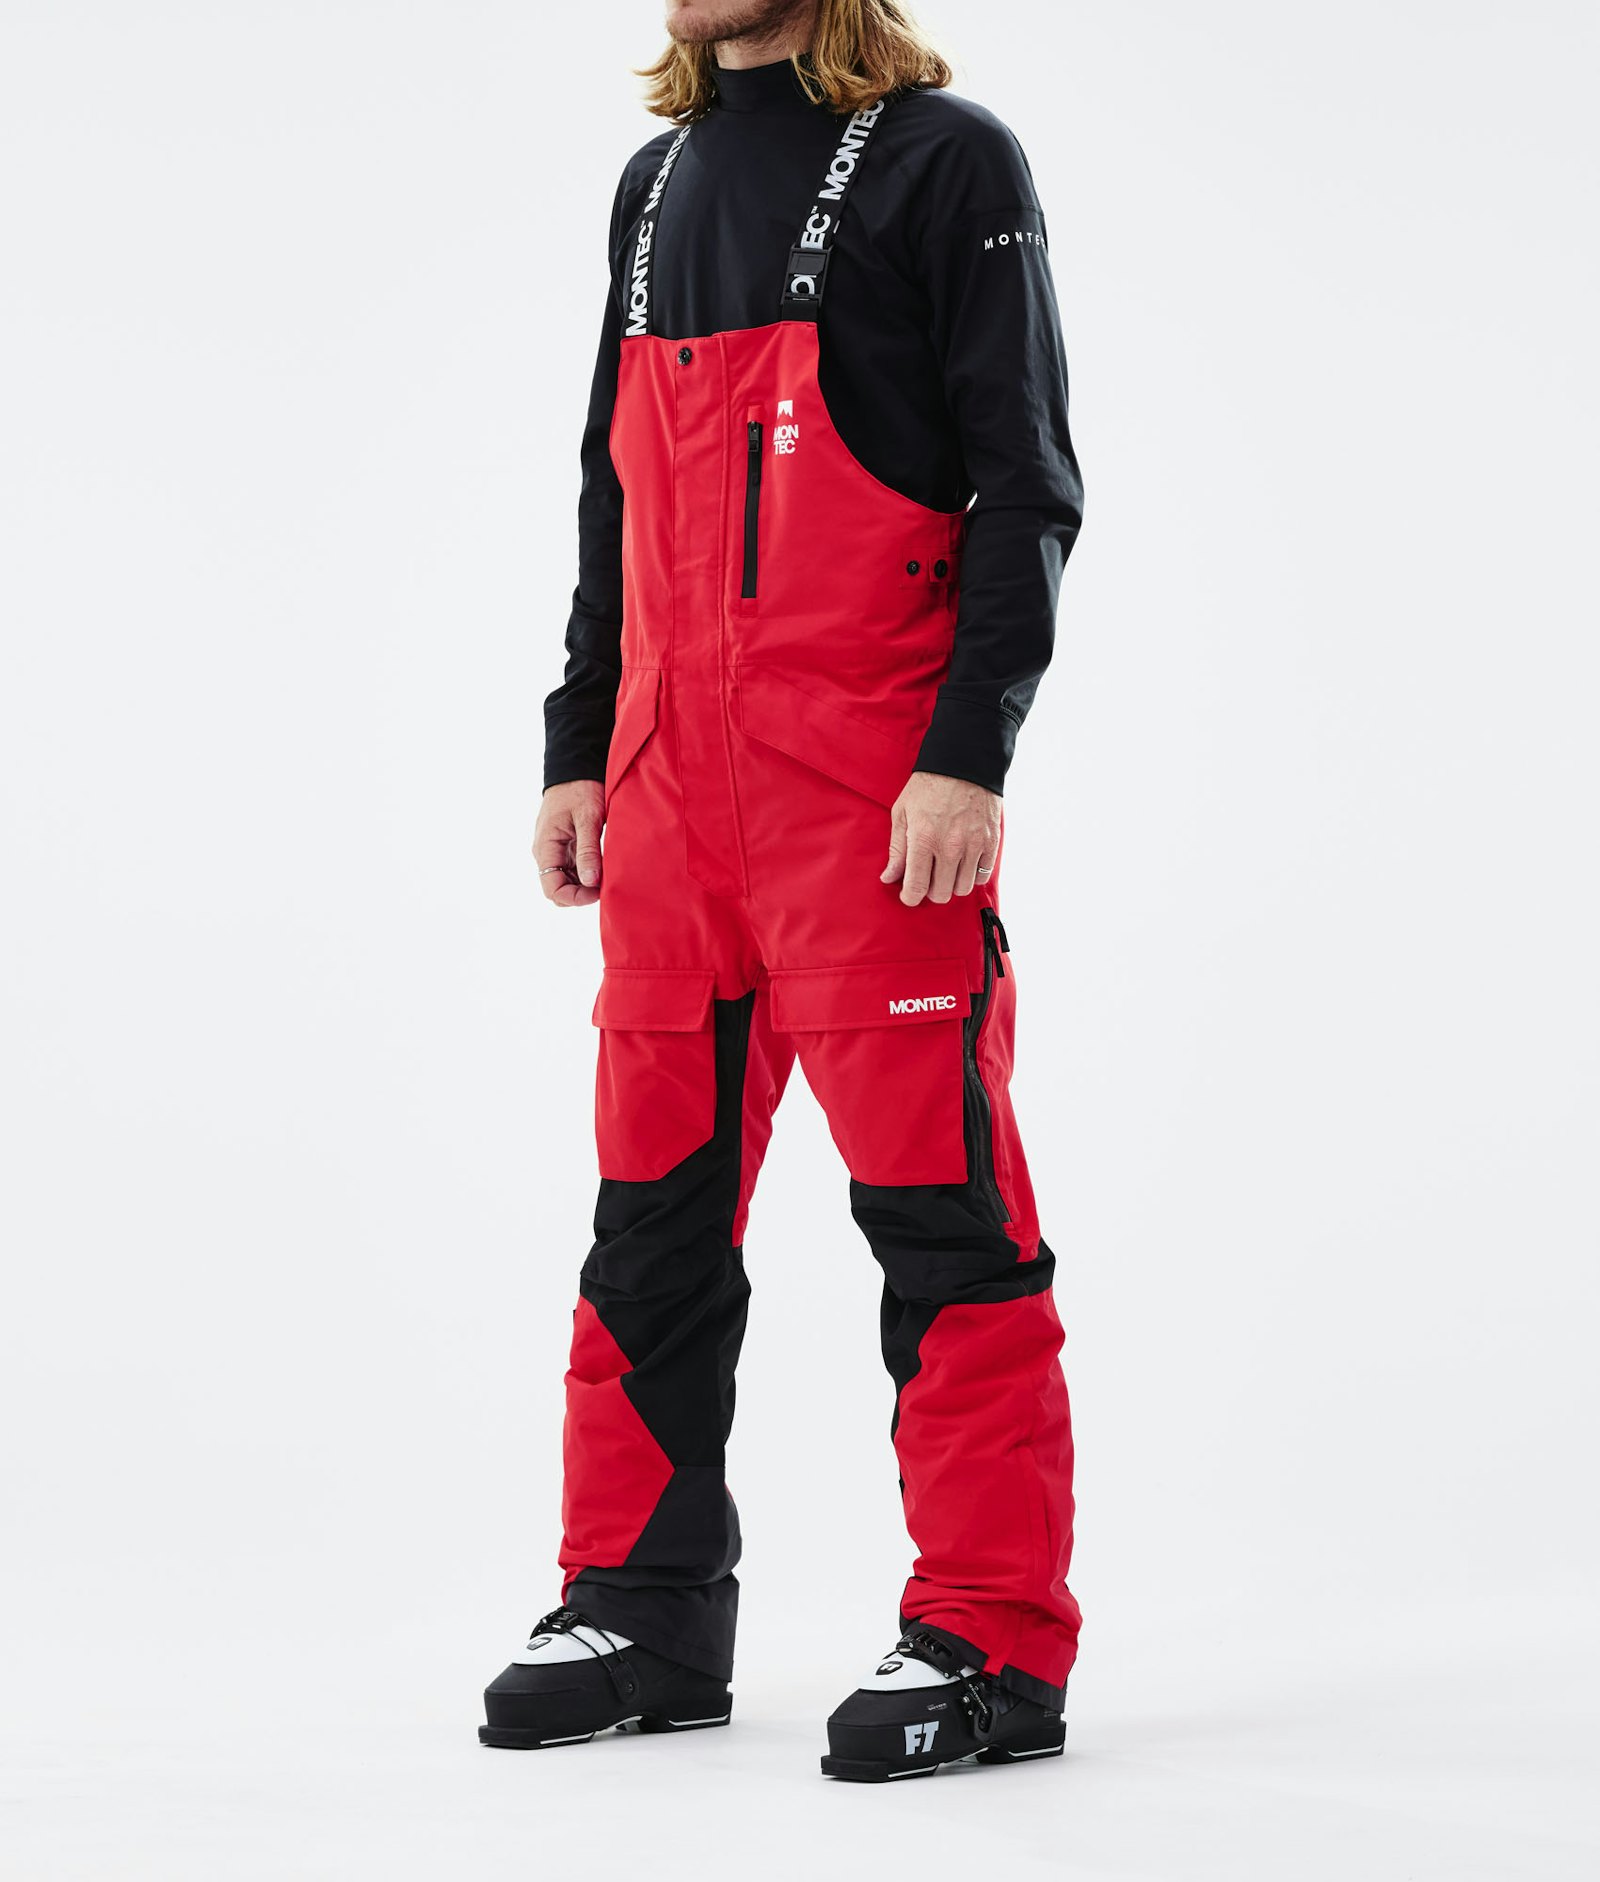 Fawk 2021 Ski Pants Men Red/Black, Image 1 of 6